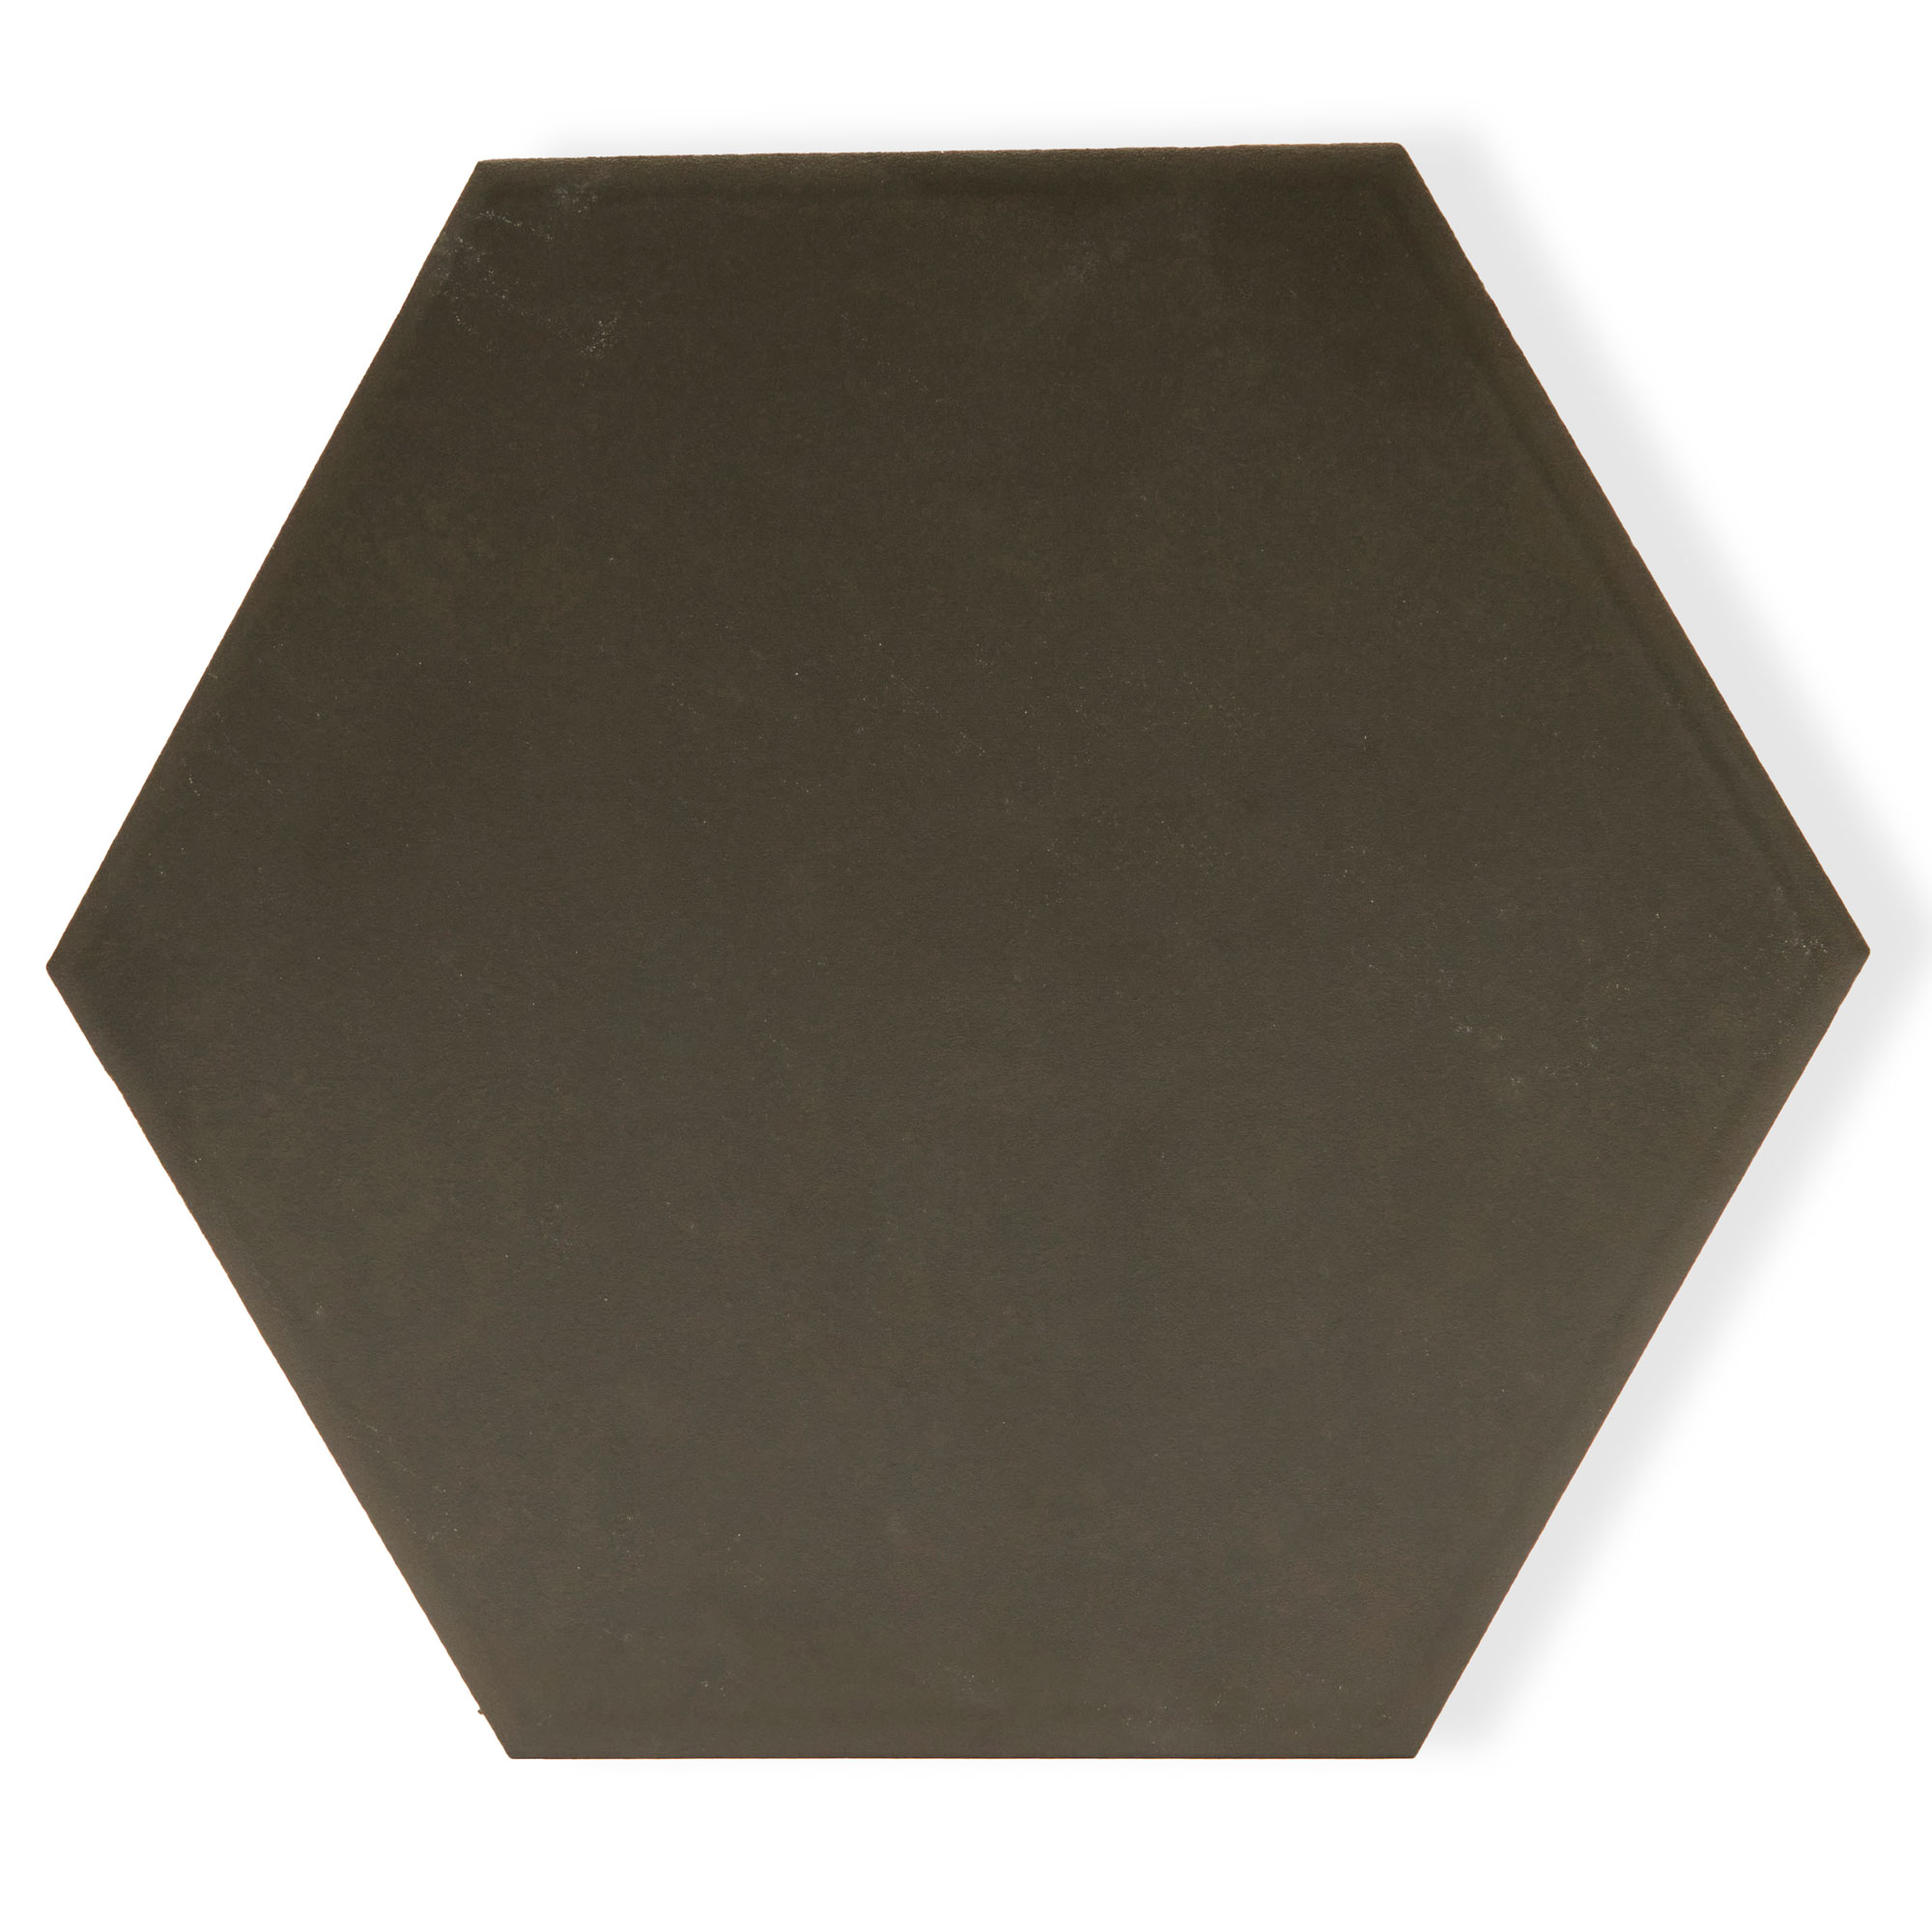 Sample: Solid Black Hex - Ceramic Tile